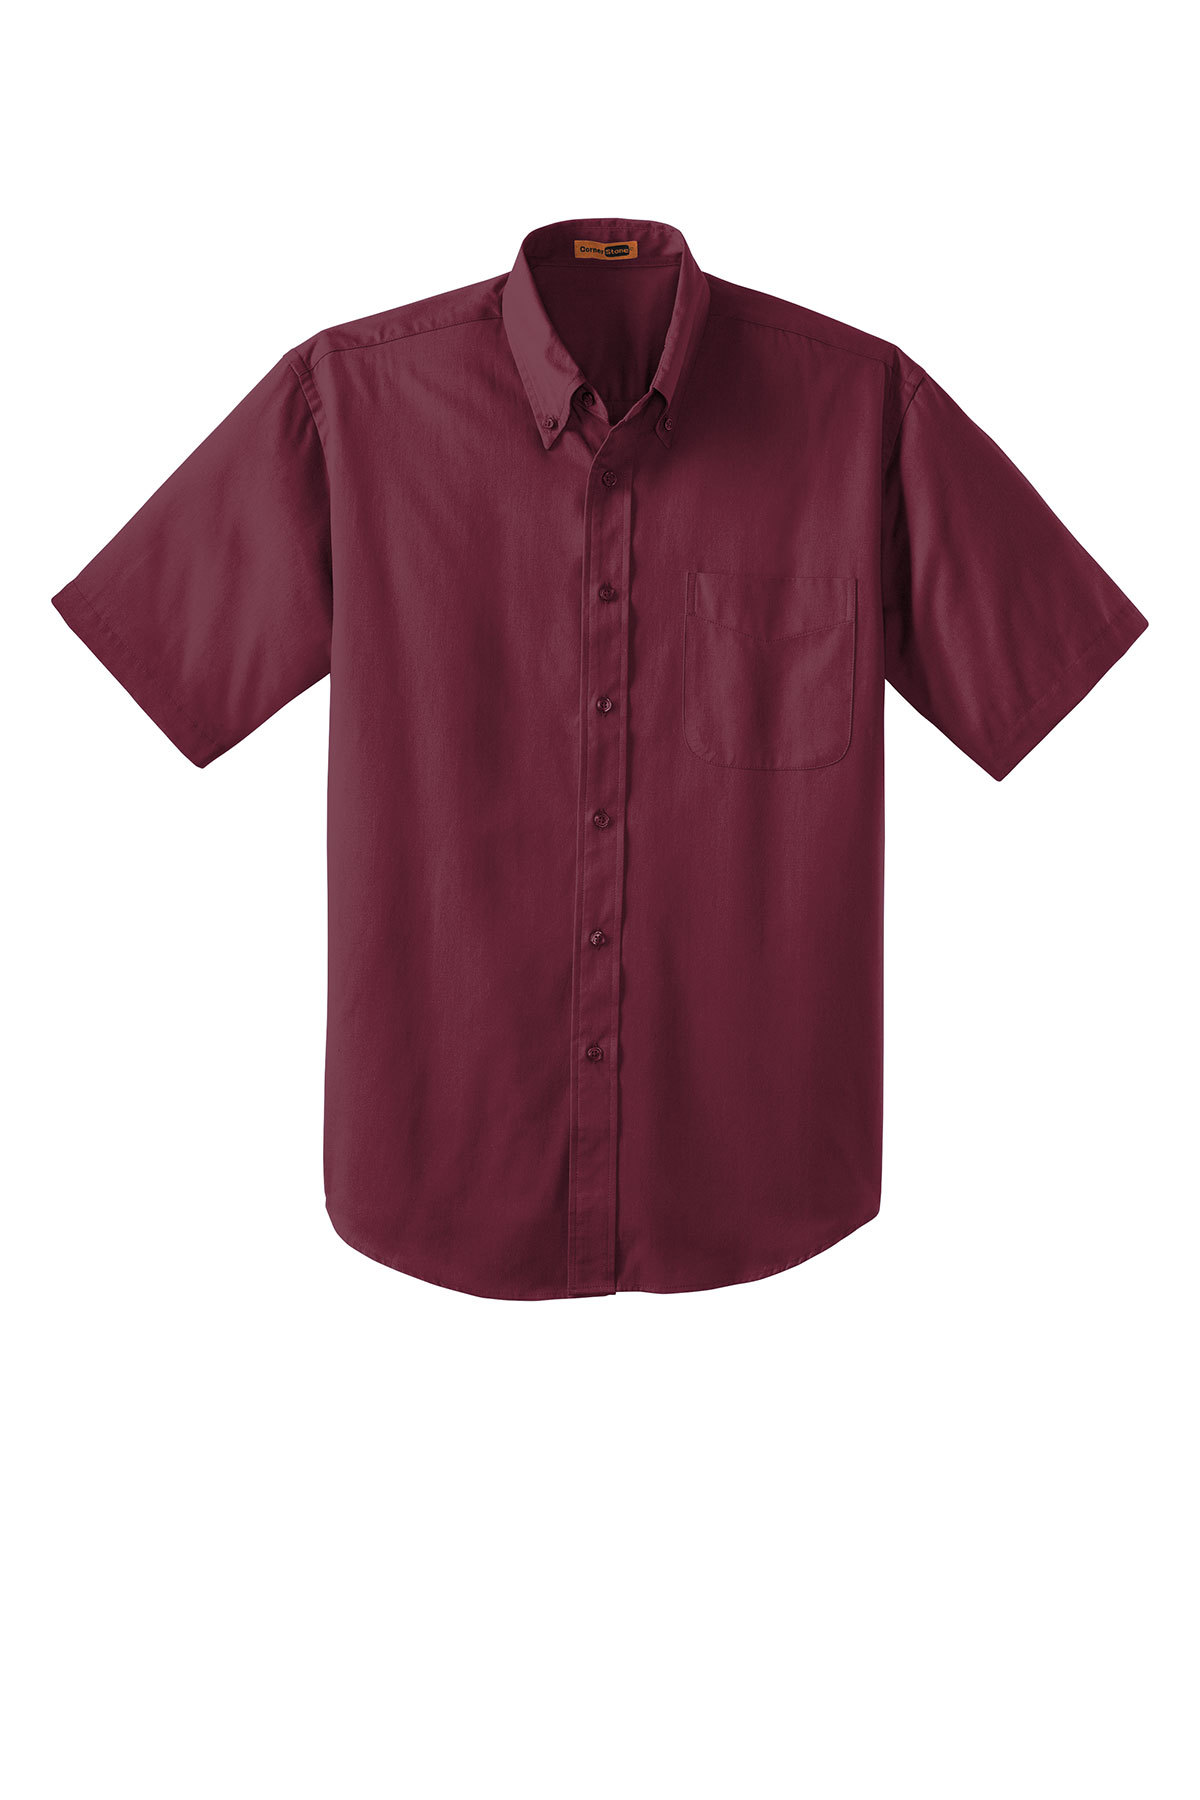 CornerStone - Short Sleeve SuperPro ™ Twill Shirt | Product | Company ...